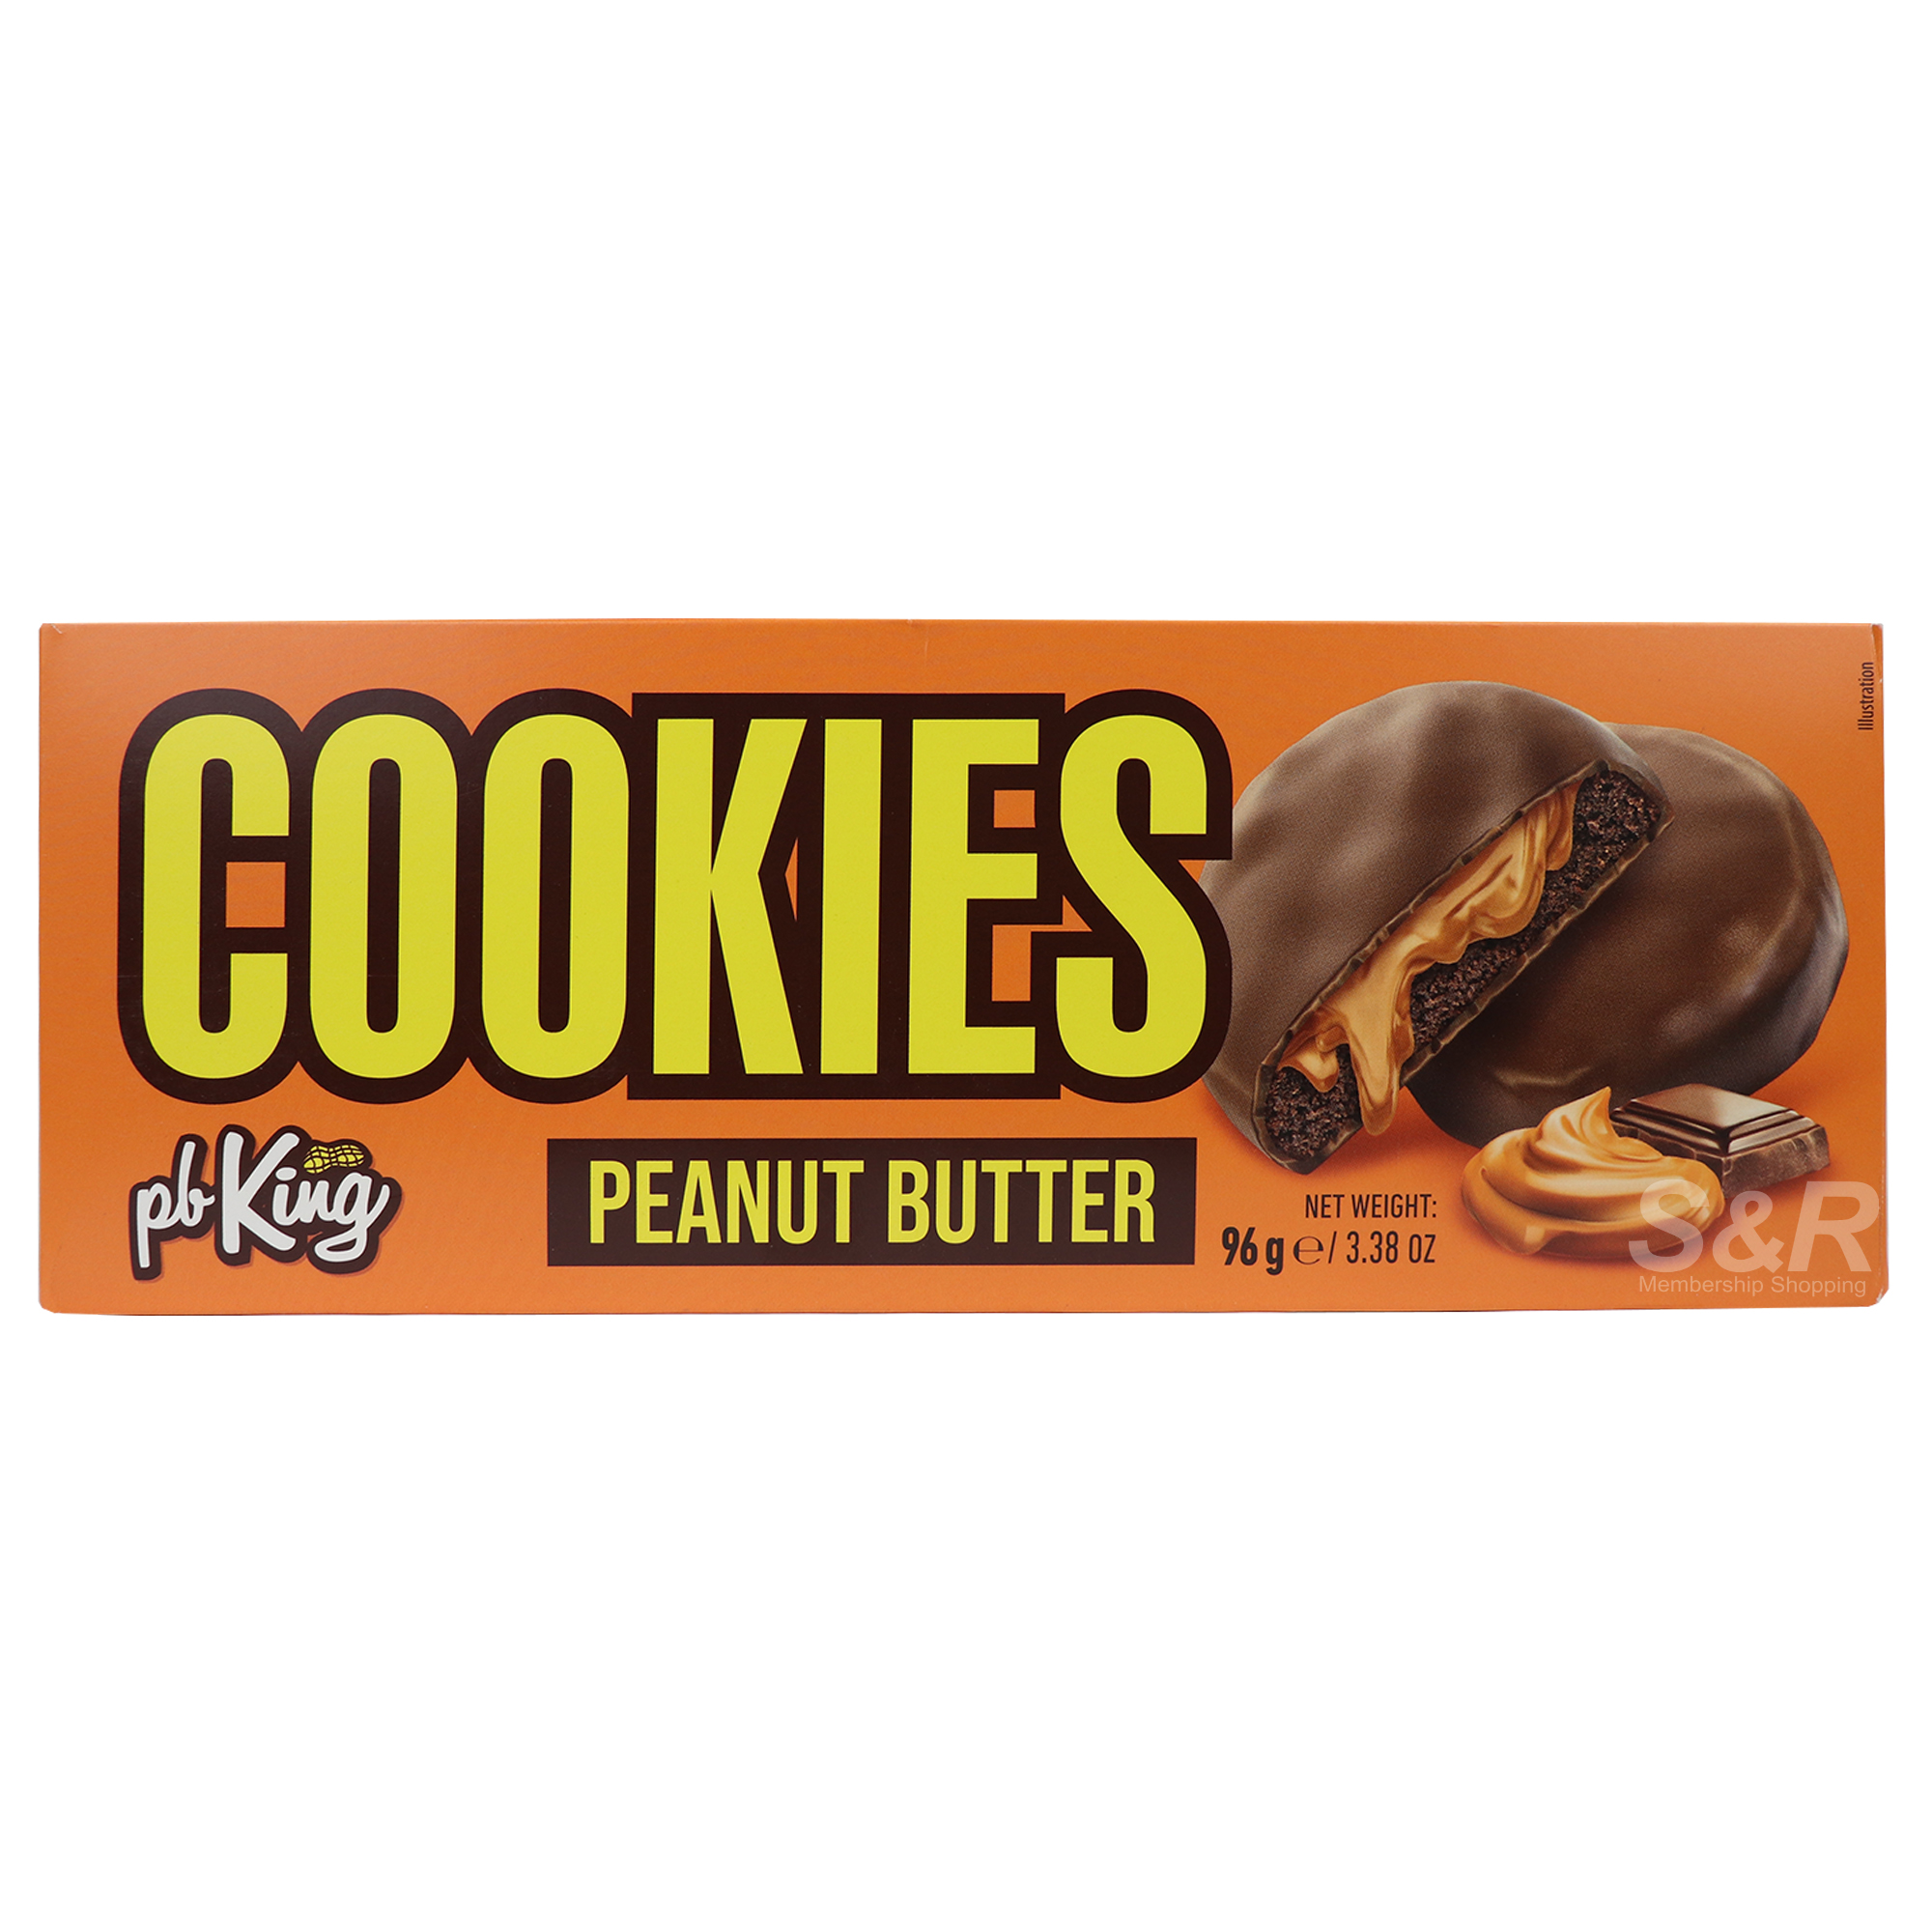 PB King Cookies Peanut Butter 96g